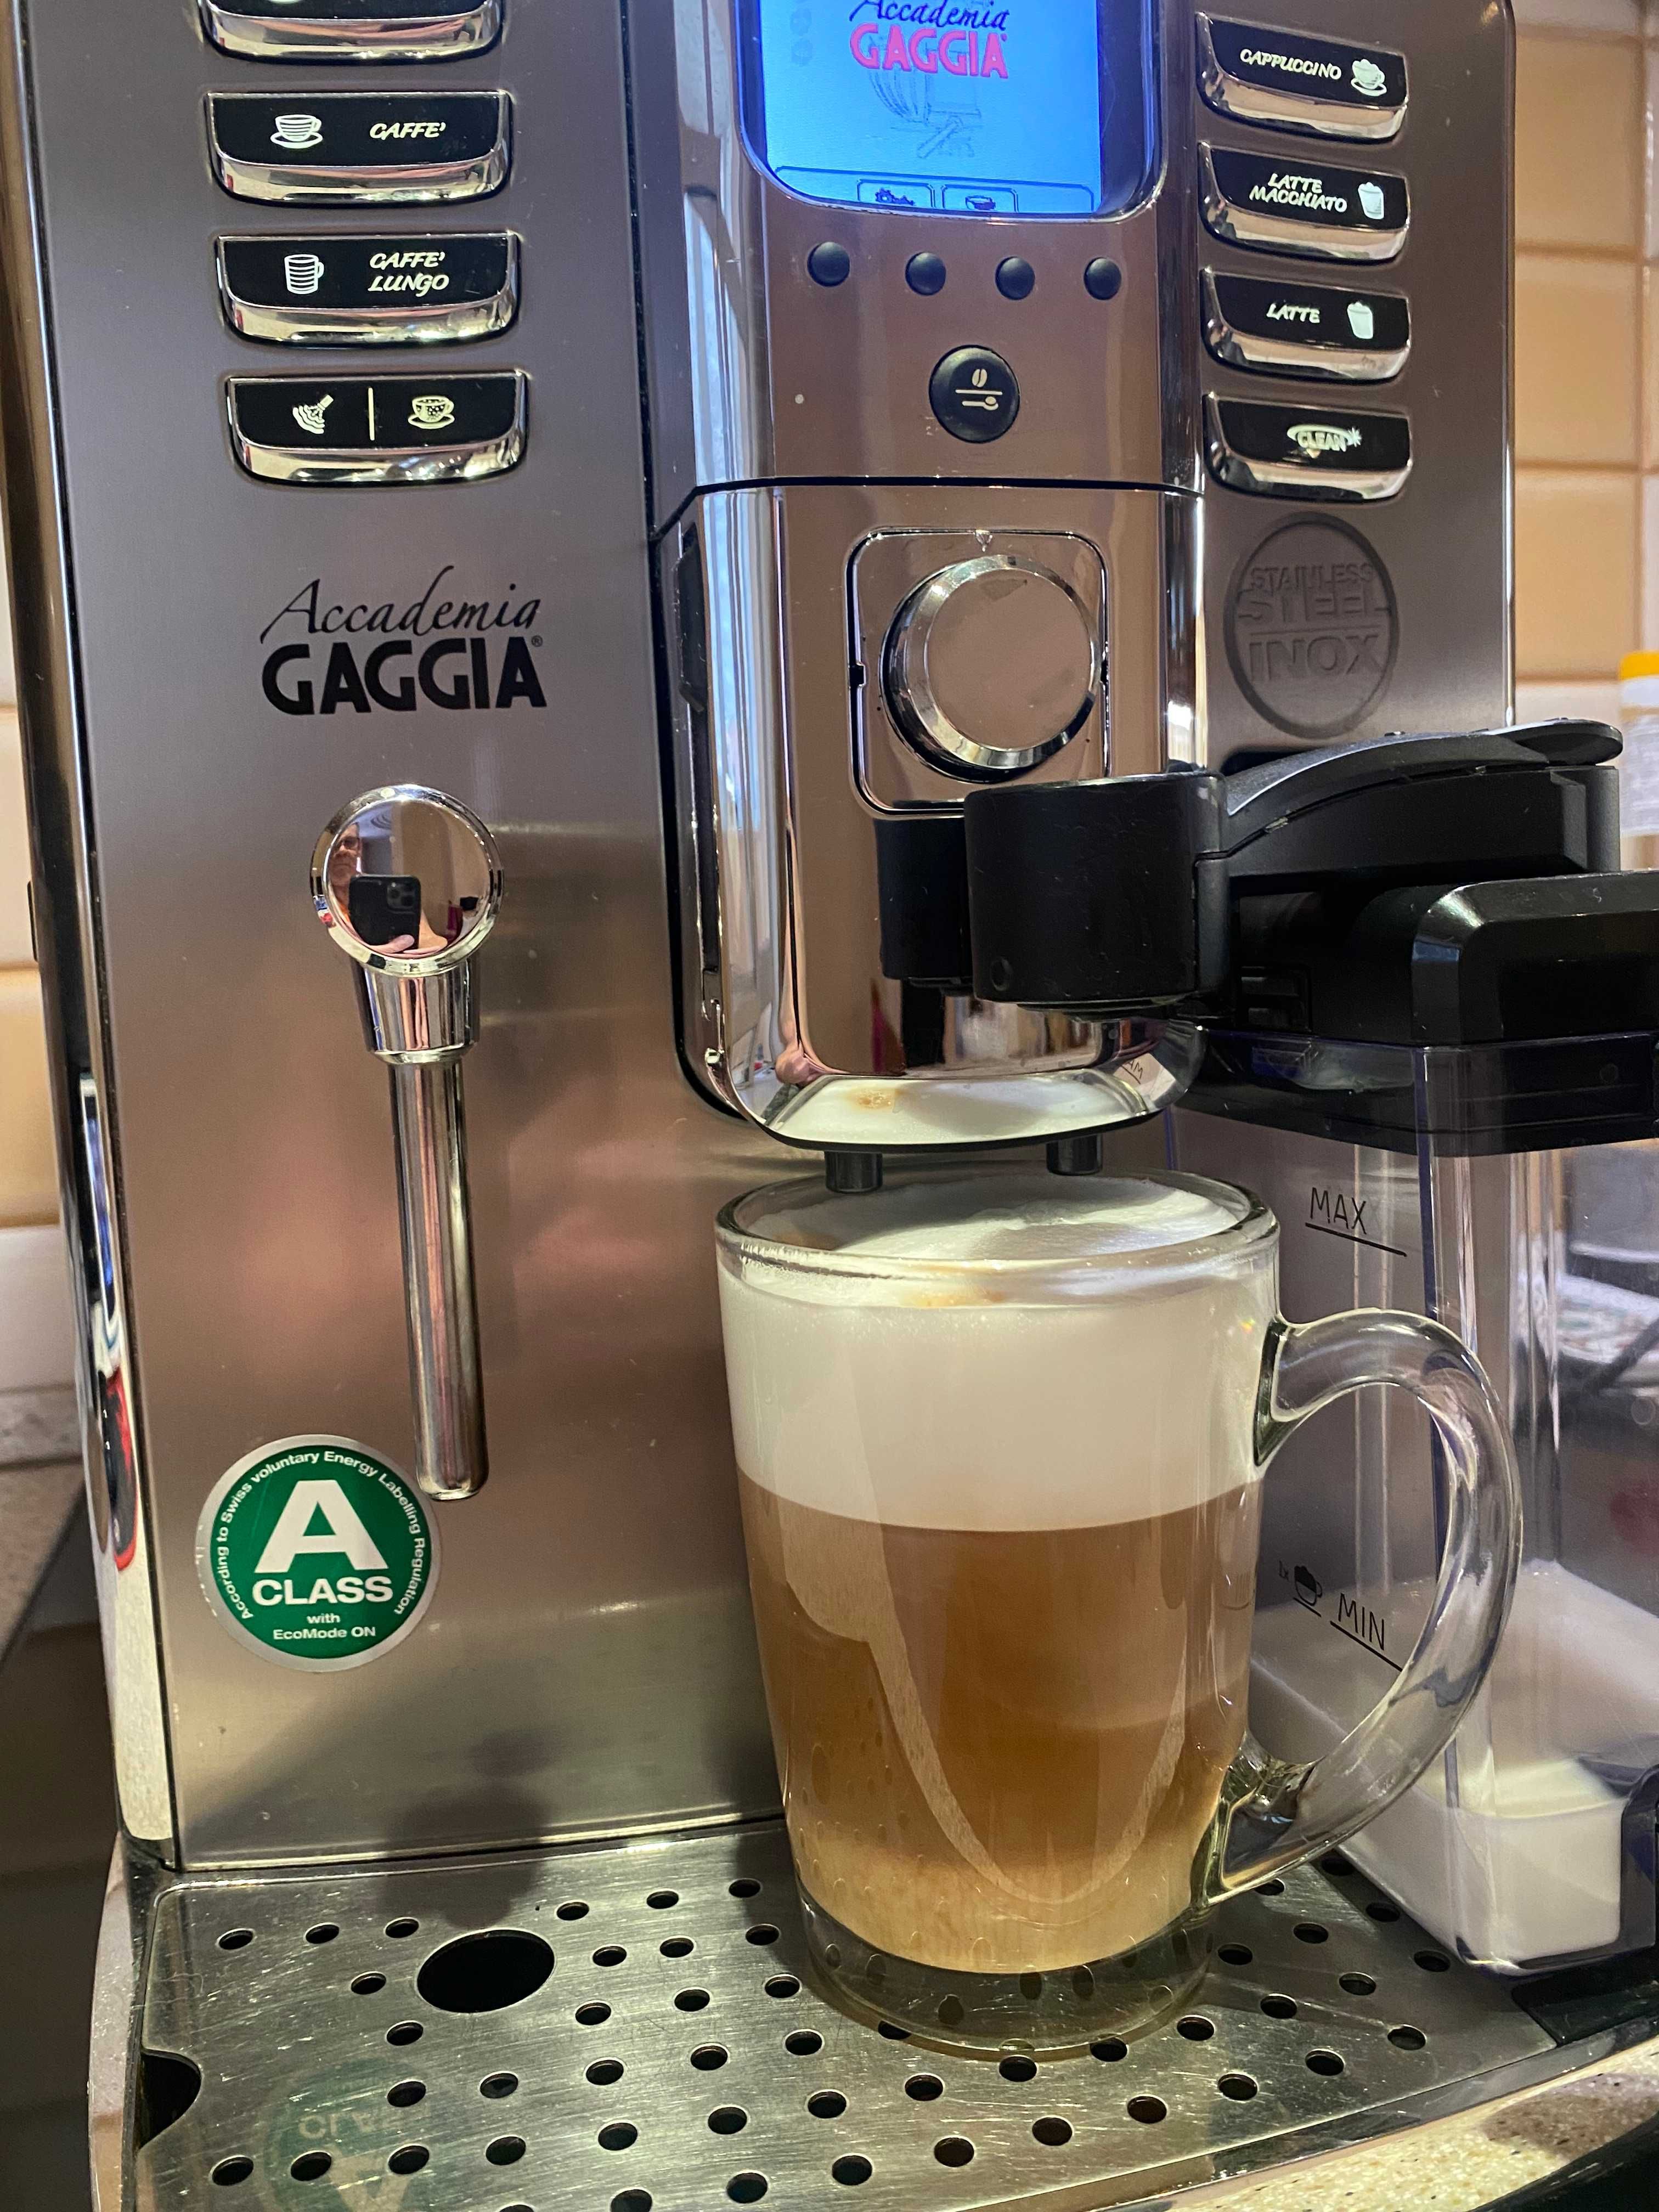 Итальянская кофе машина Gaggia Accademia.